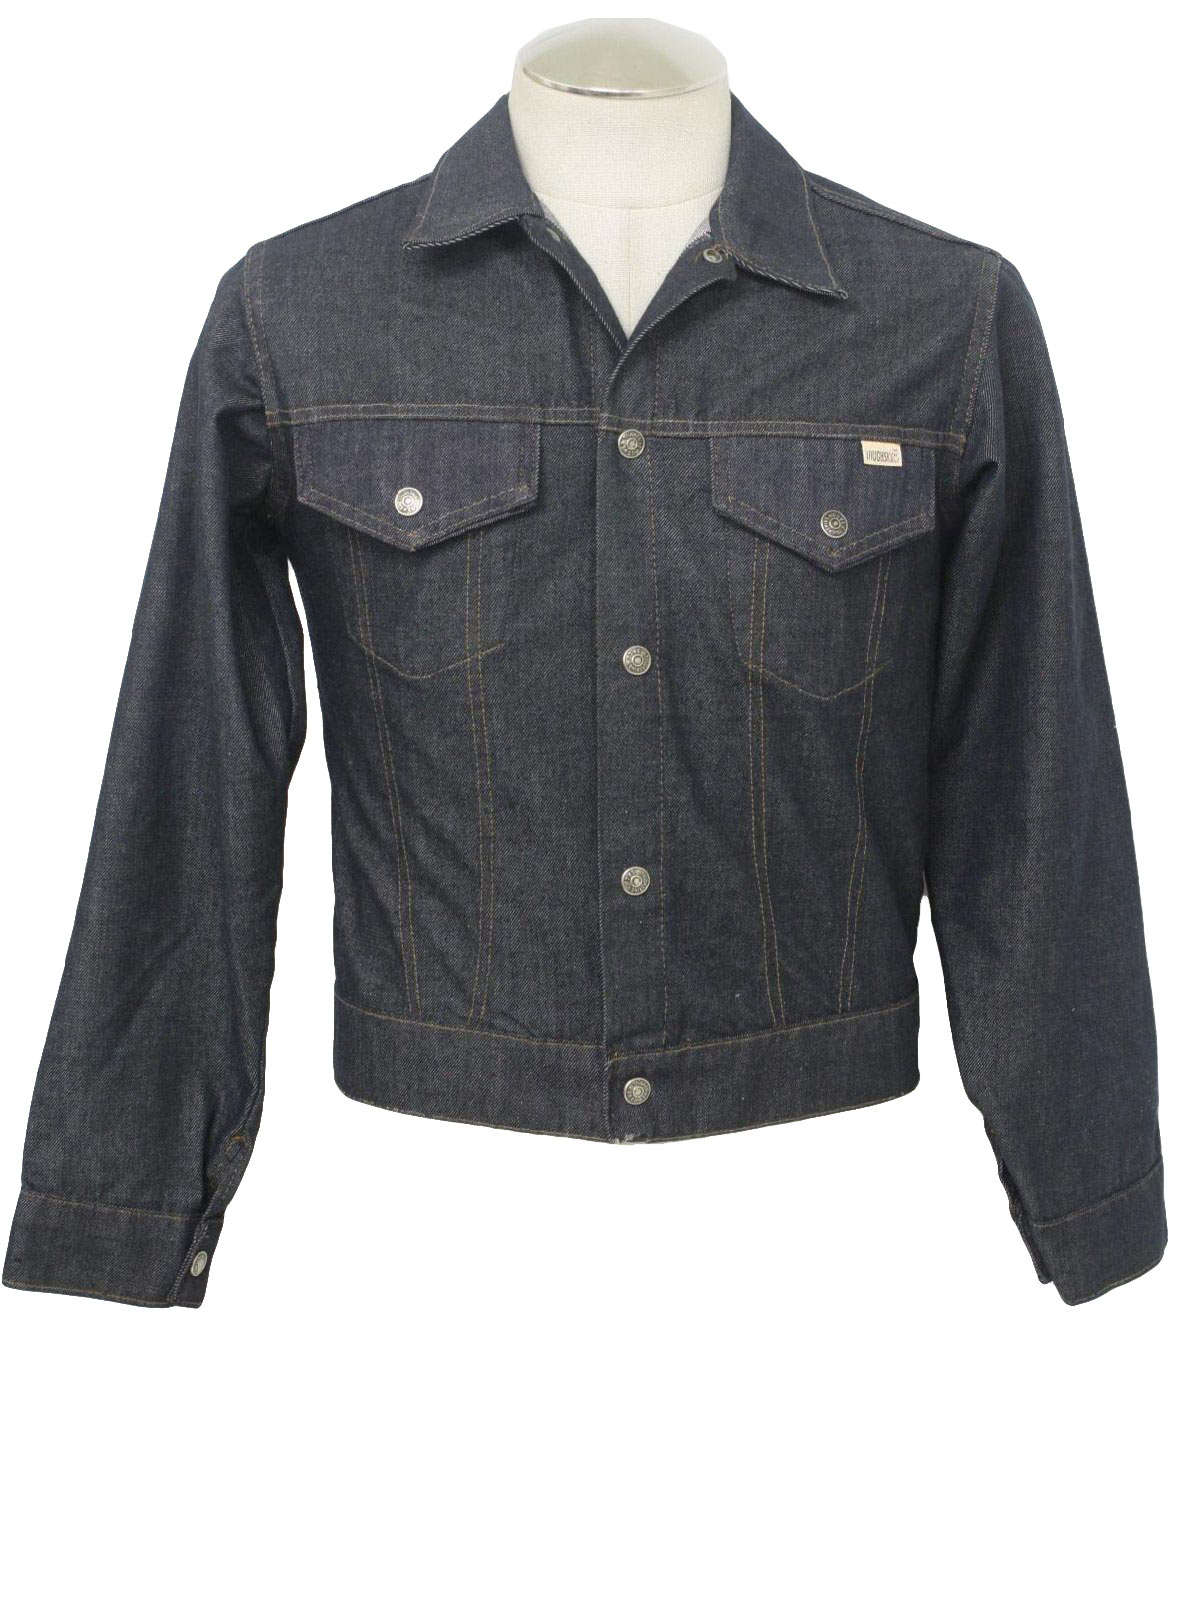 60s Vintage Sears Roebuck Tough skins Jacket: Late 60s -Sears